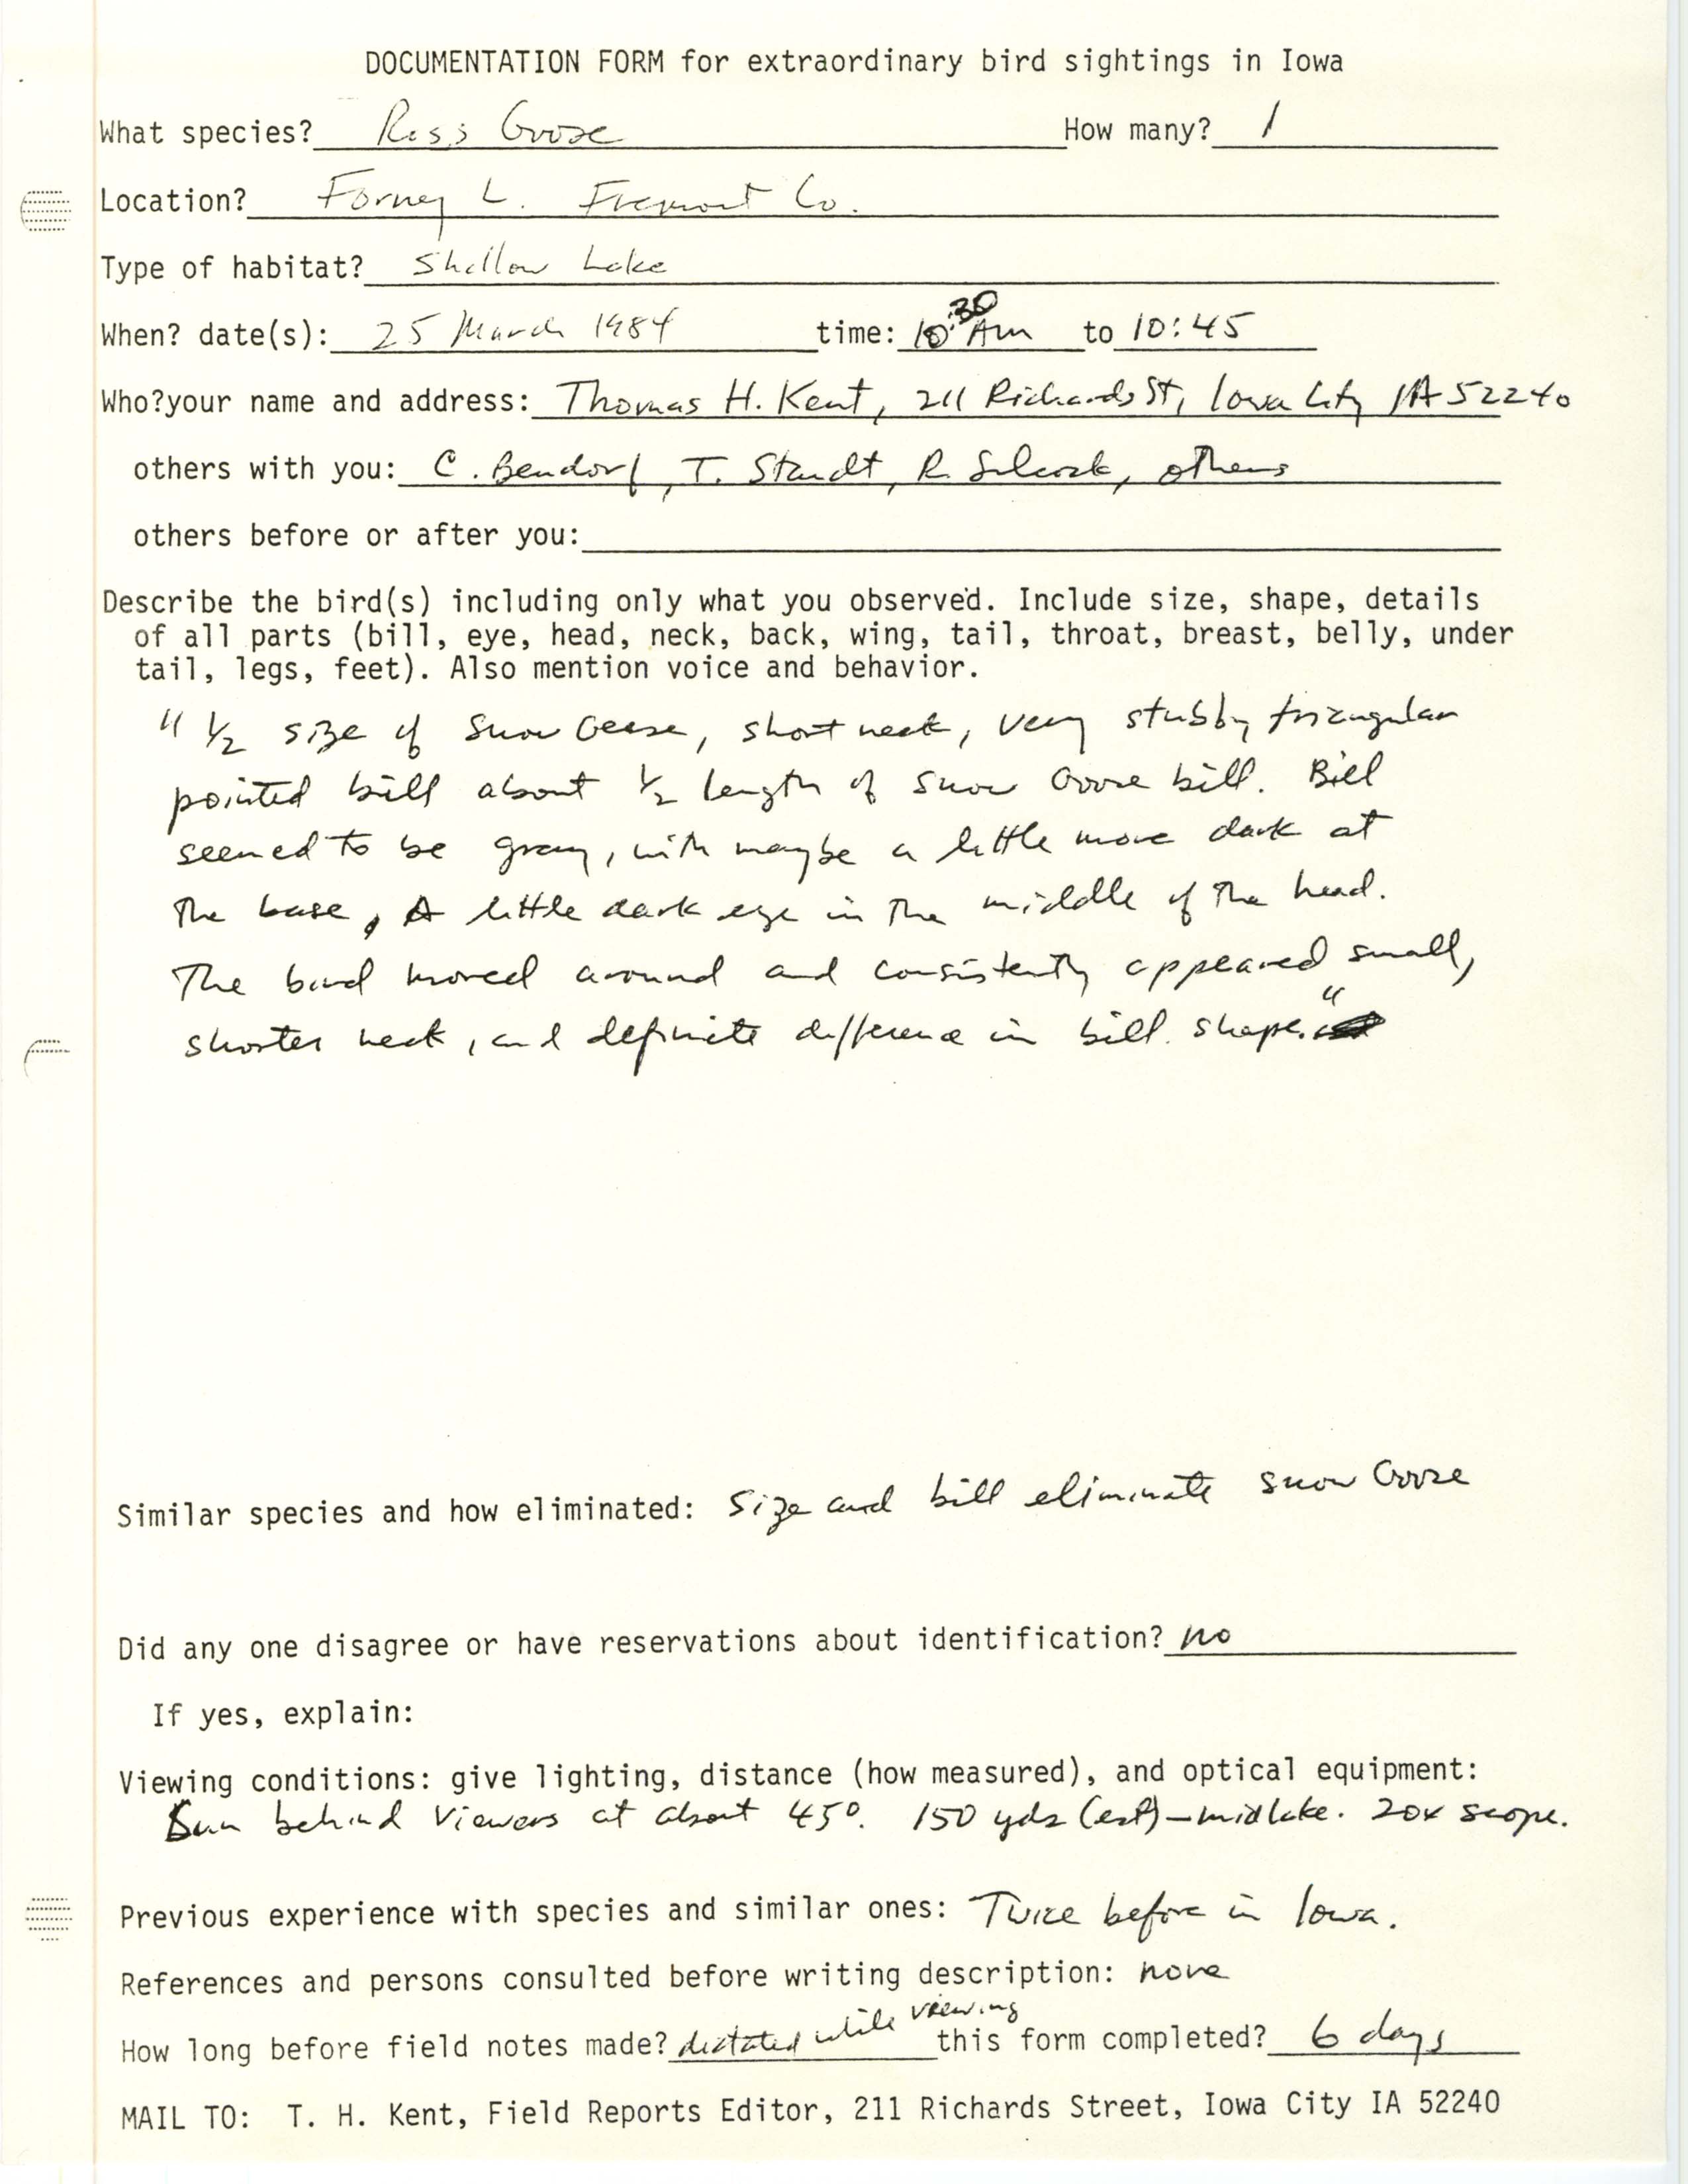 Rare bird documentation form for Ross' Goose at Forneys Lake, 1984